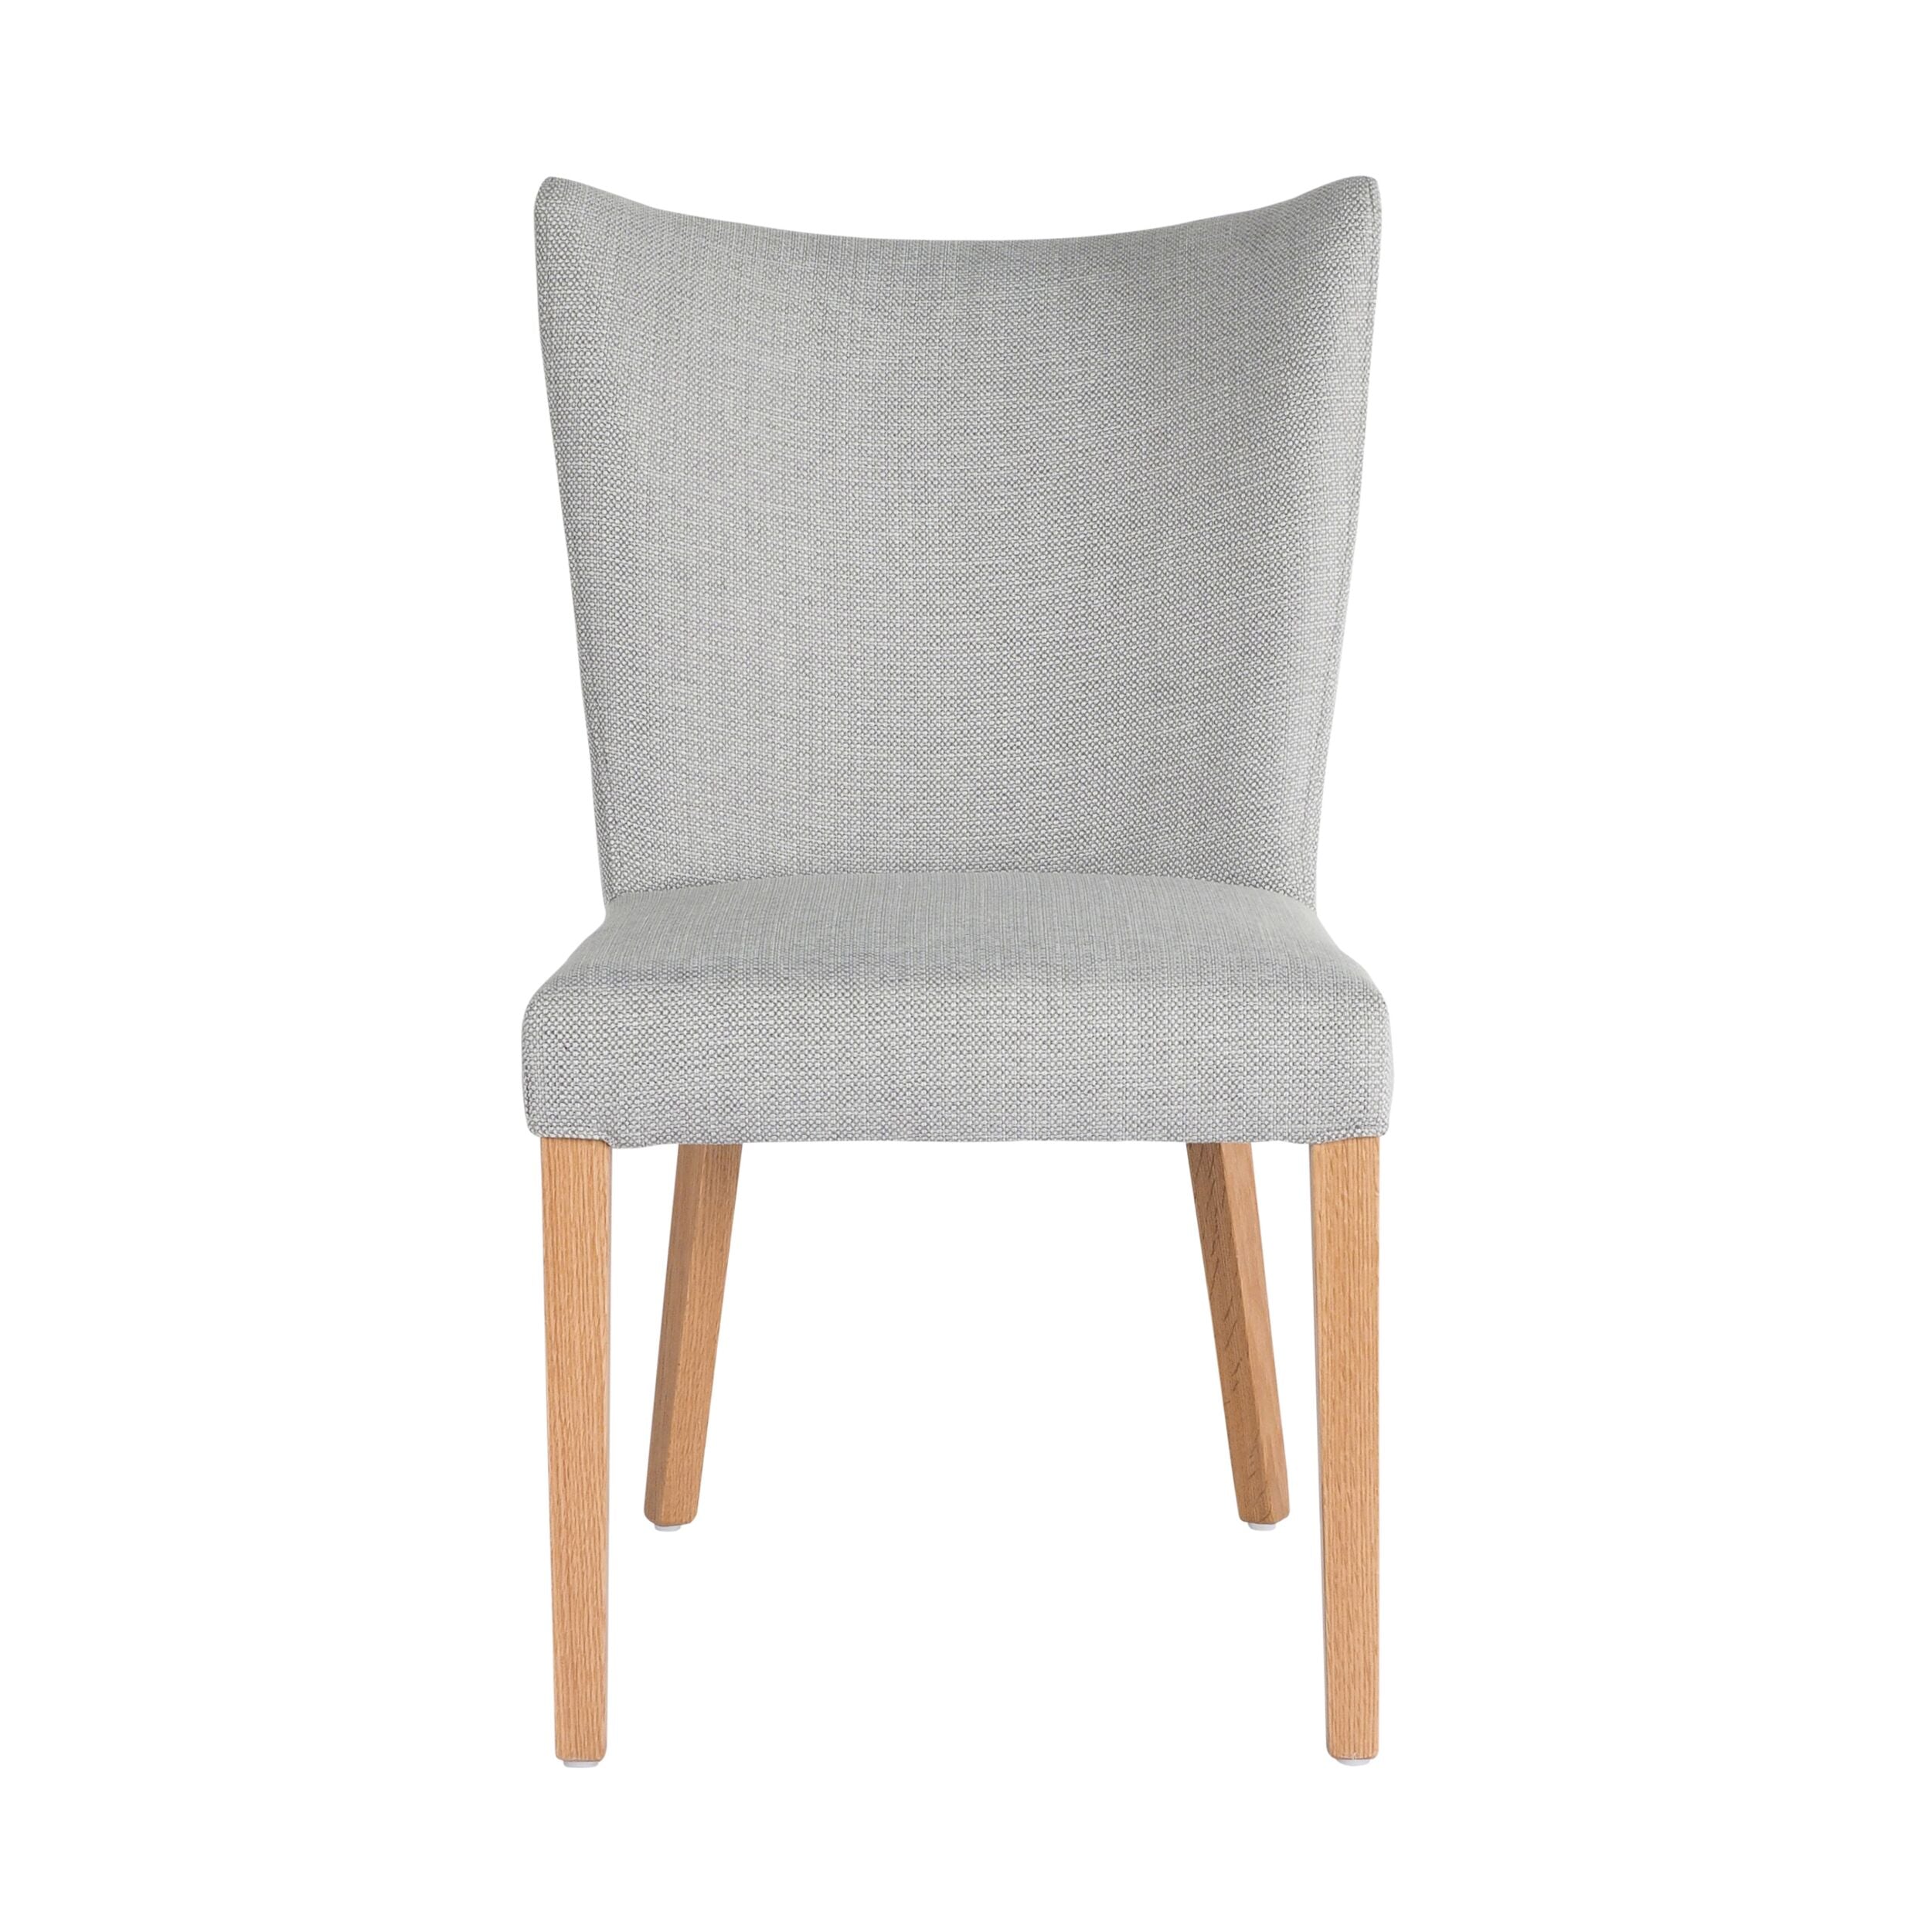 Conlen Dining Chair Grey & Natural Timber